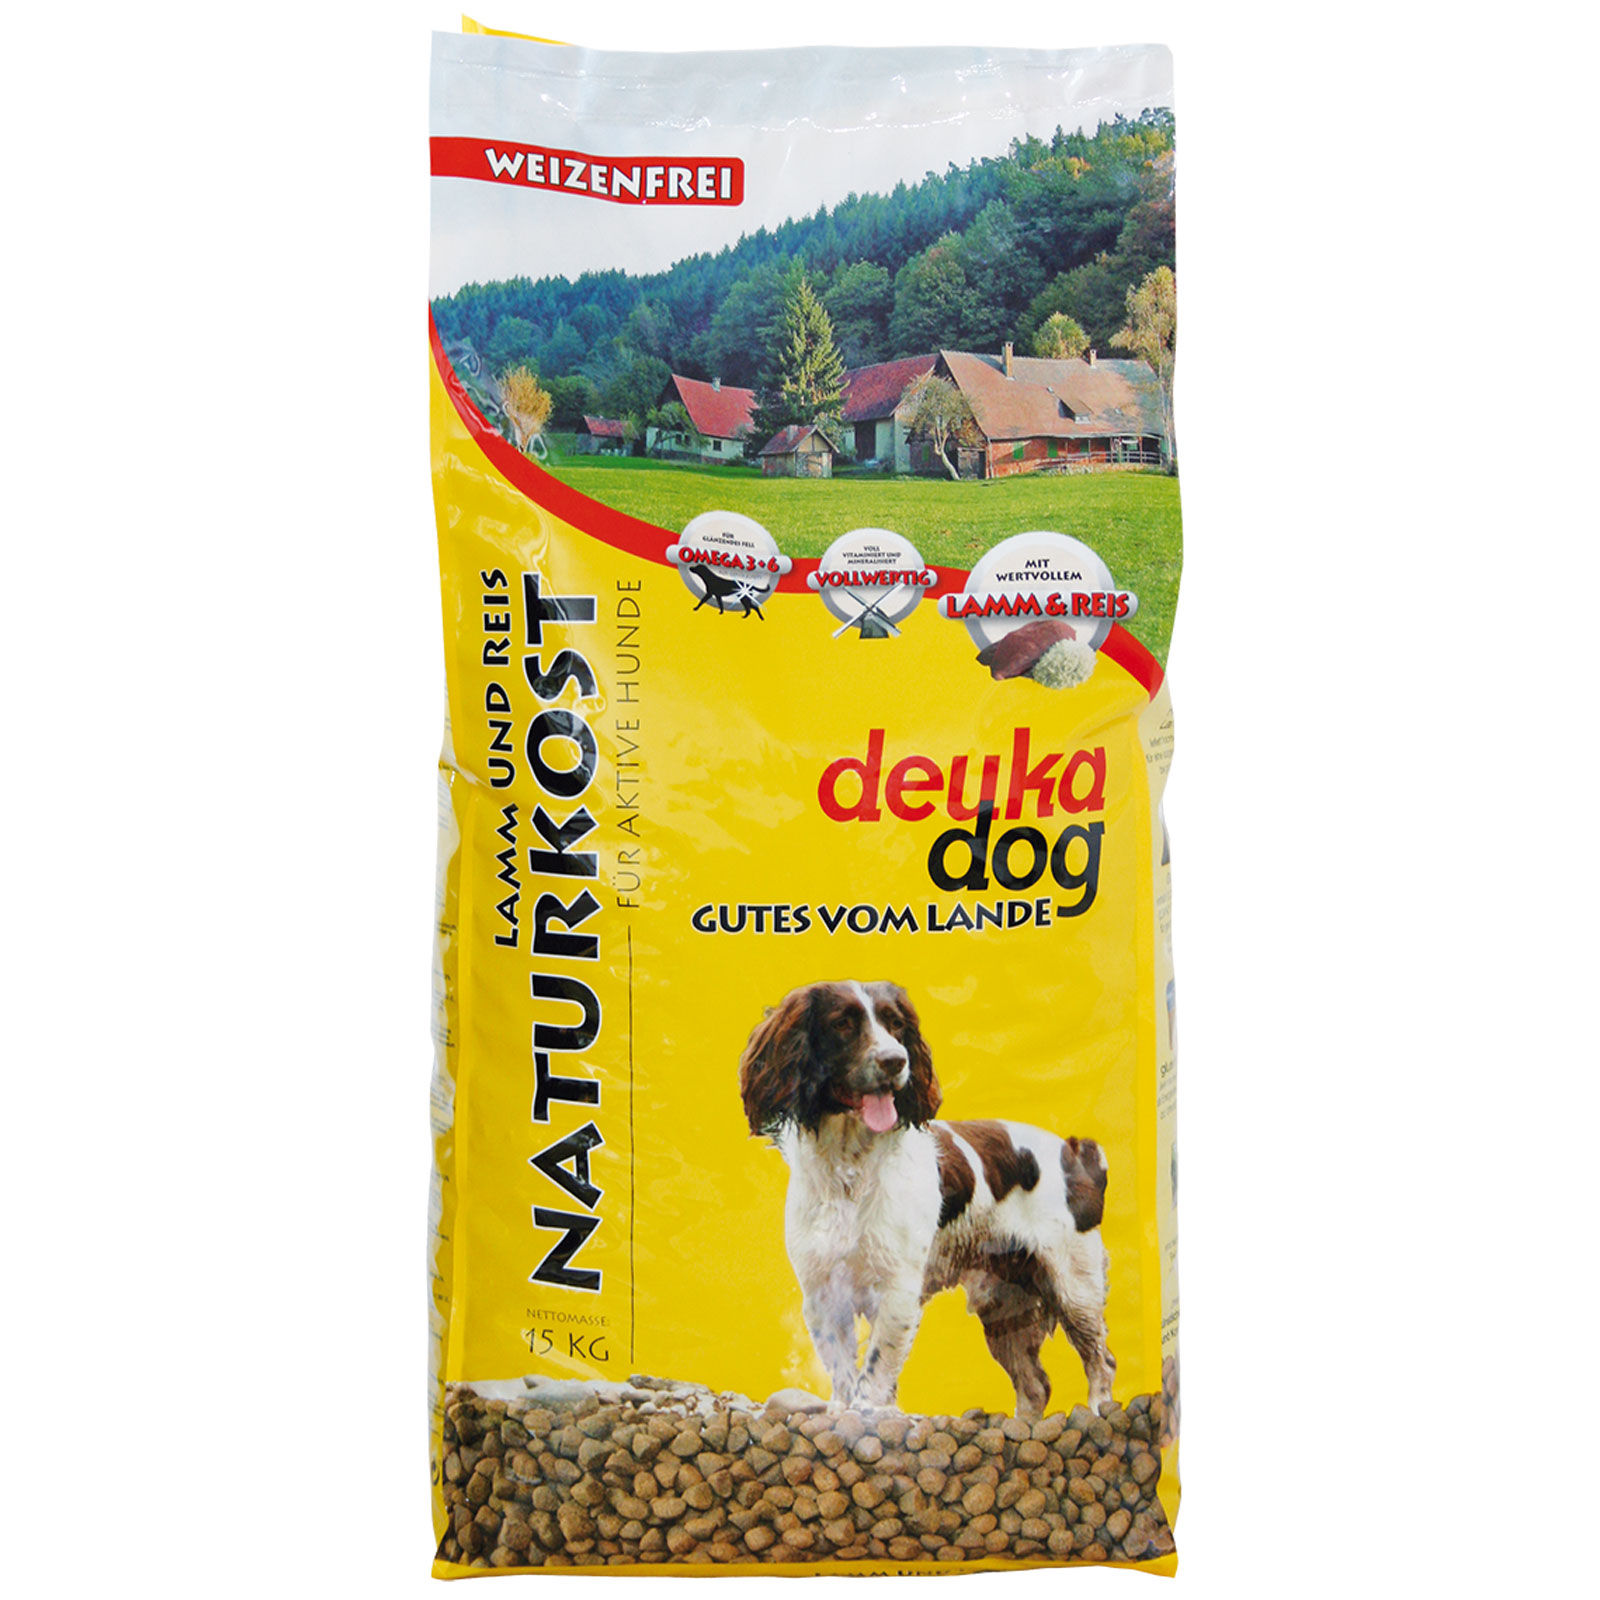 Deuka Dog food Naturkost wheat free